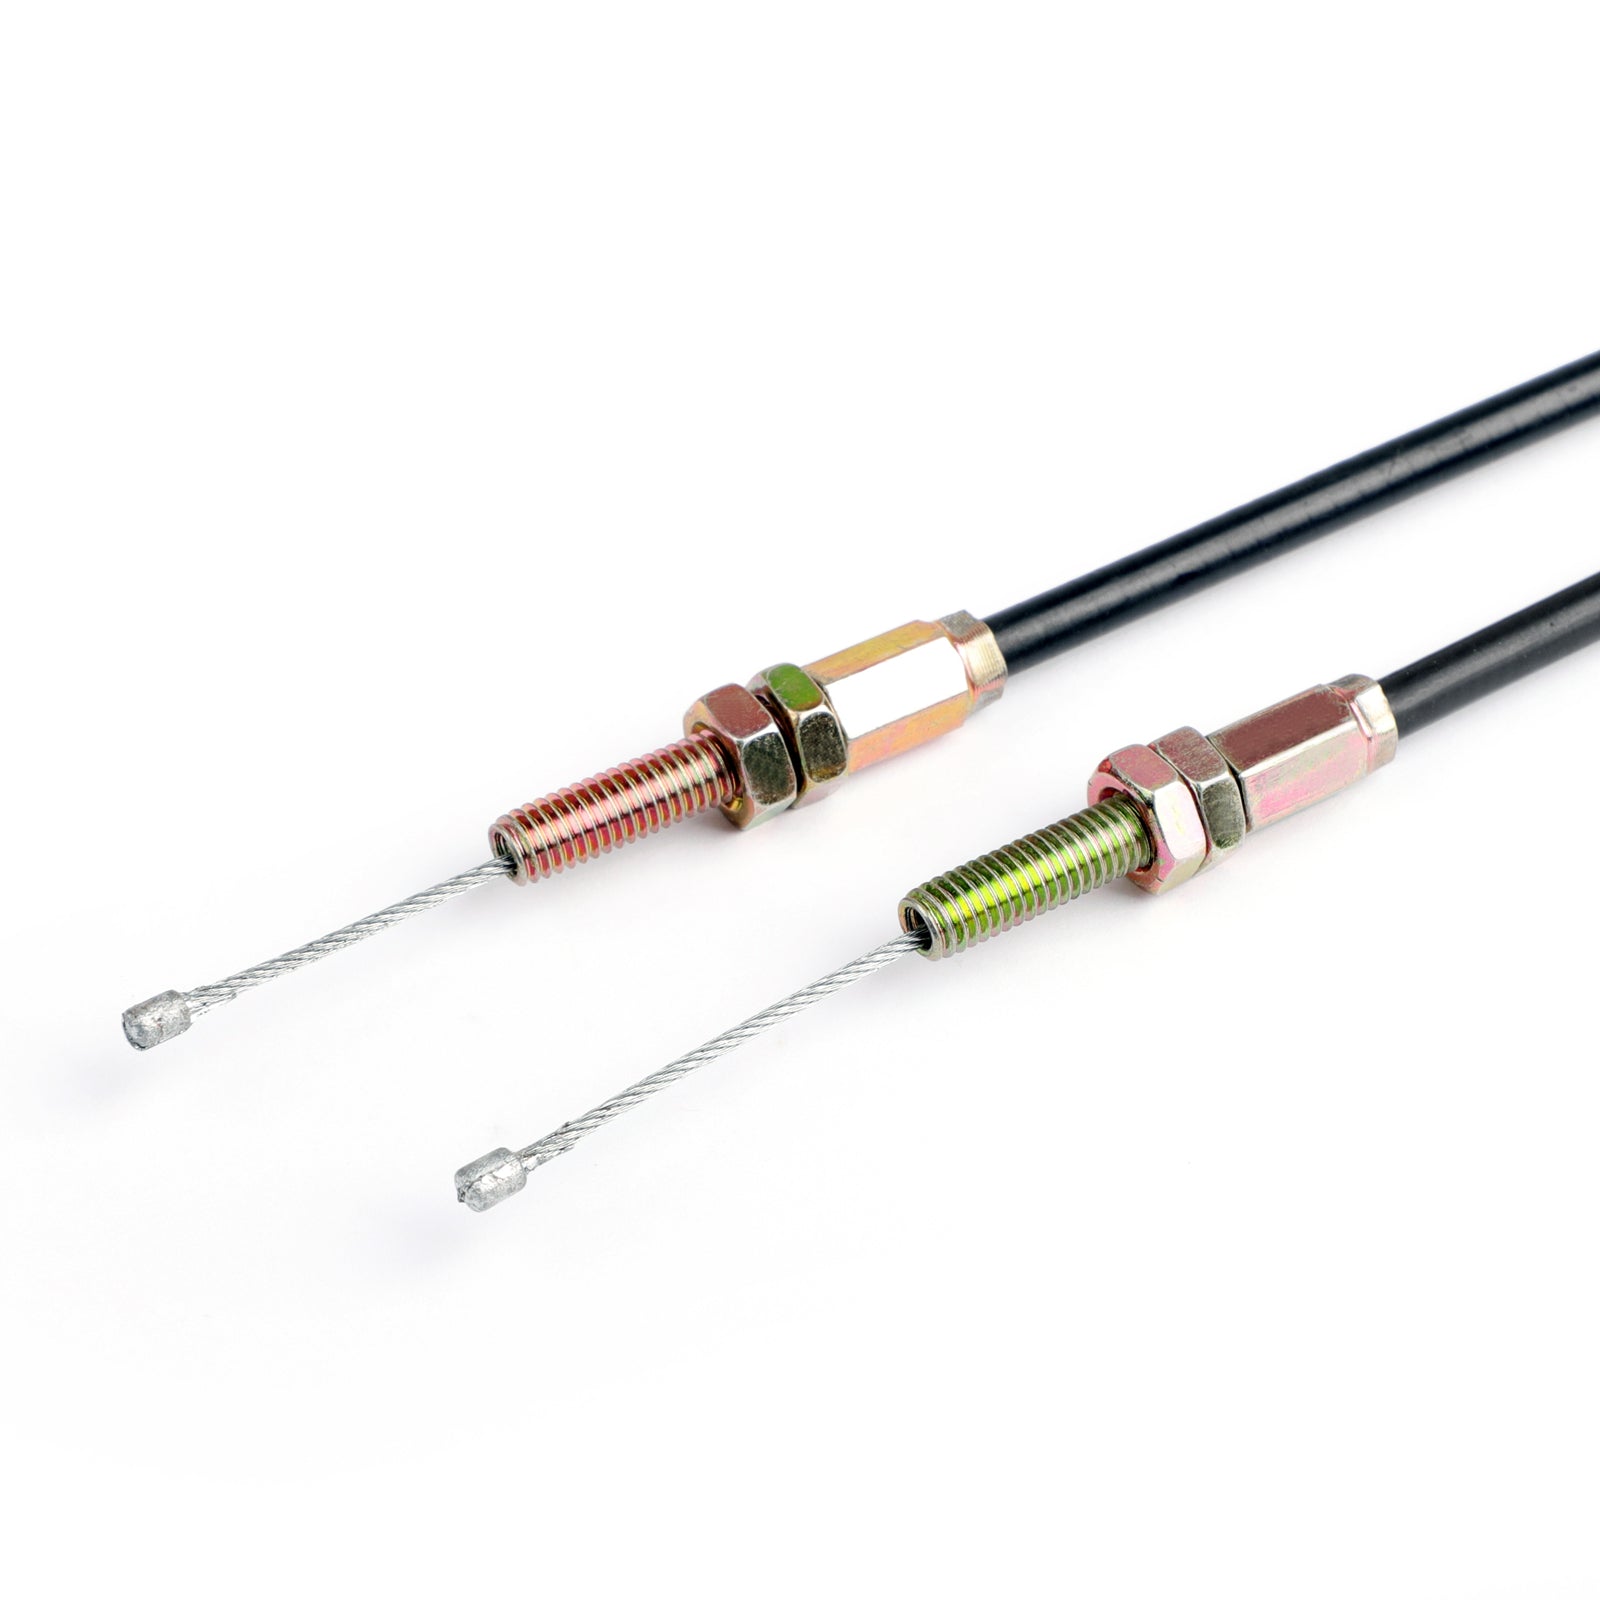 Cable de válvula polea de alambre 29L-1133E-00 para Yamaha TZR125 1987-1994 RD350 1985-1992 genérico